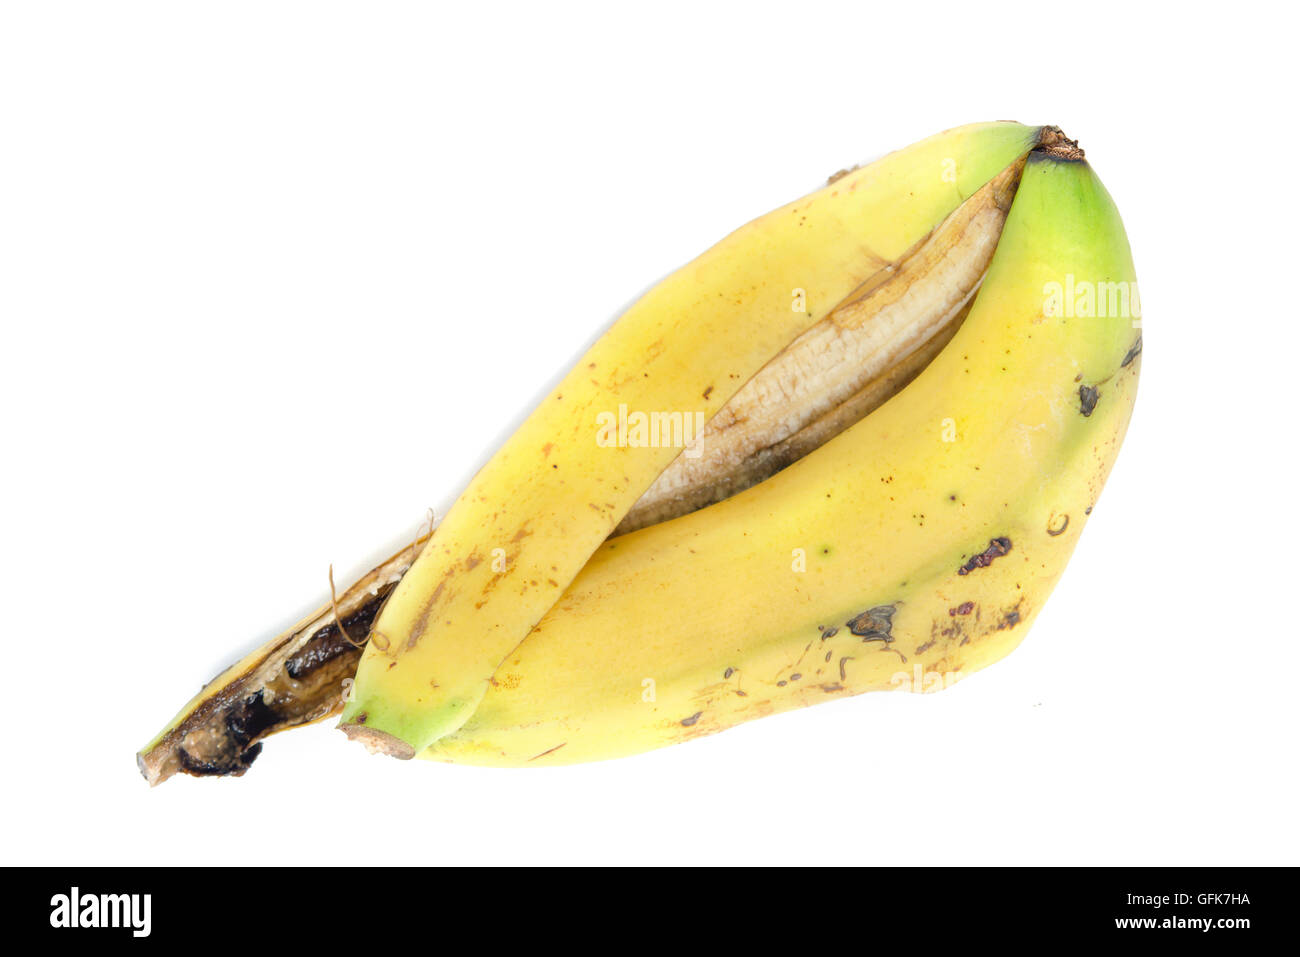 Banana (Other names are Musa banana acuminata, Musa balbisiana, and Musa x paradisiaca) fruit peel isolated on white background Stock Photo